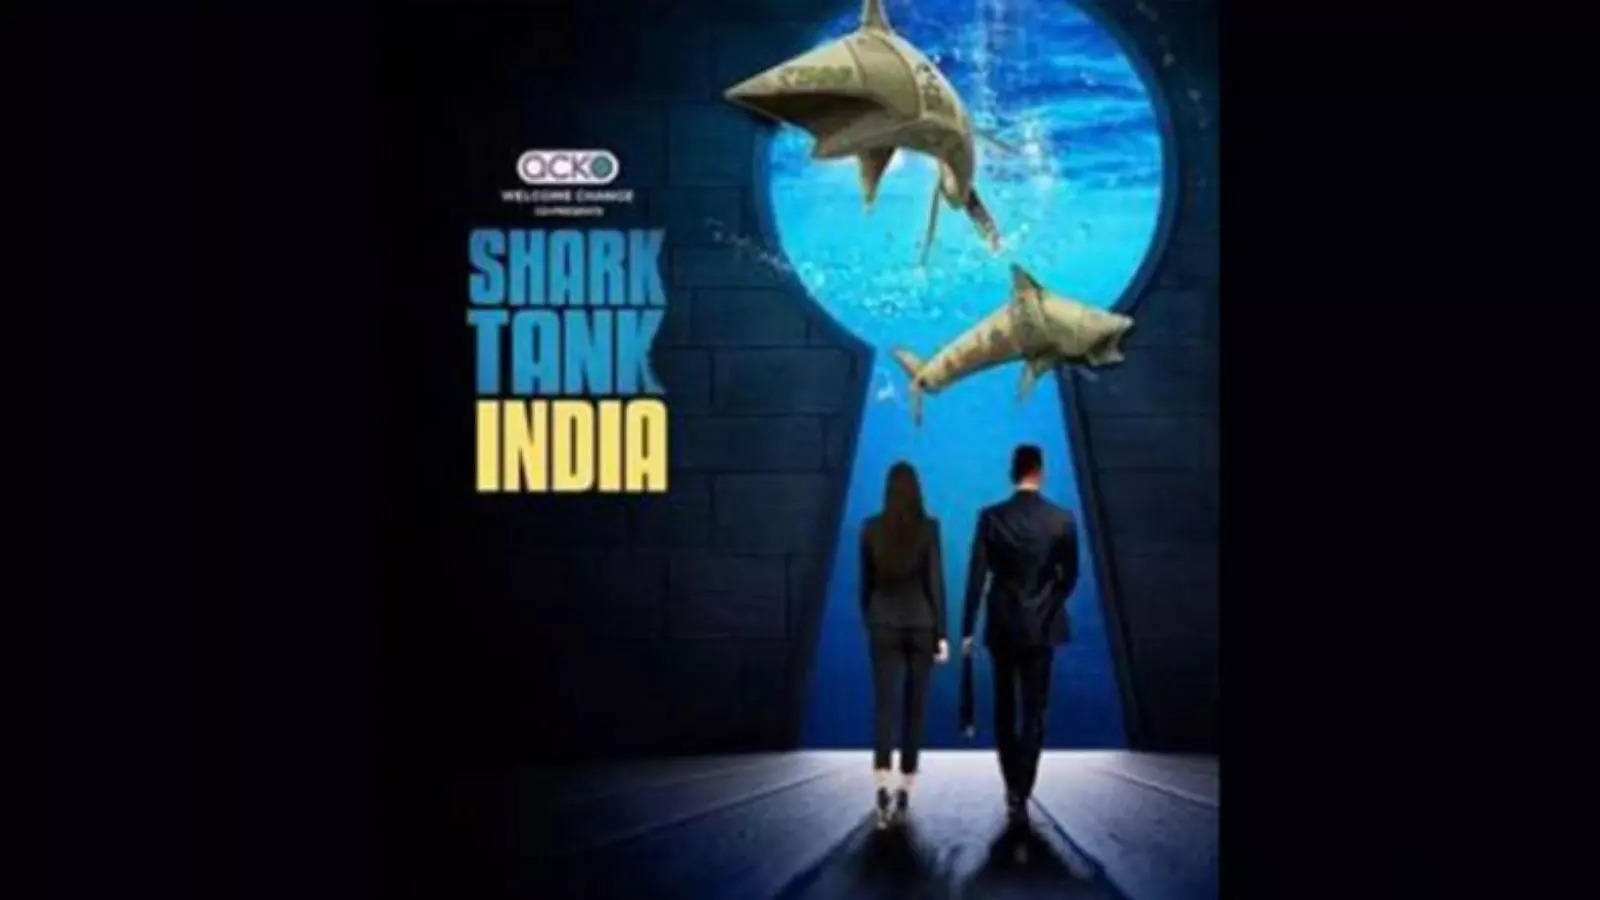 Shark Tank India Registrations Started - Register Now on SonyLIV